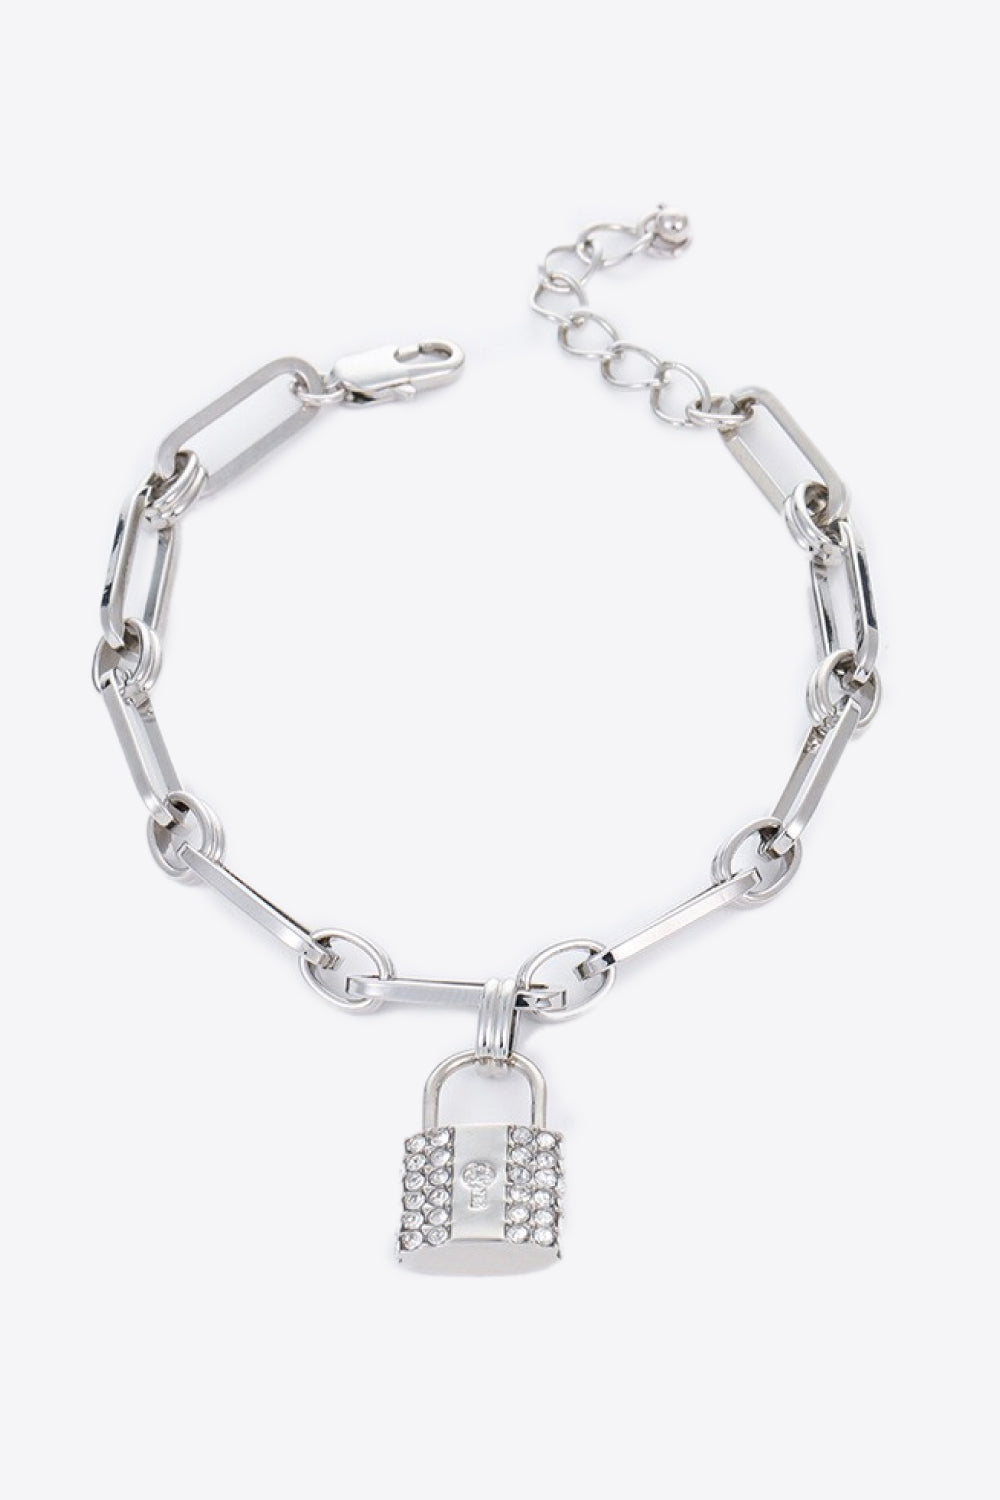 Lock Charm Chain Bracelet - Silver / One Size - Women’s Jewelry - Bracelets - 1 - 2024